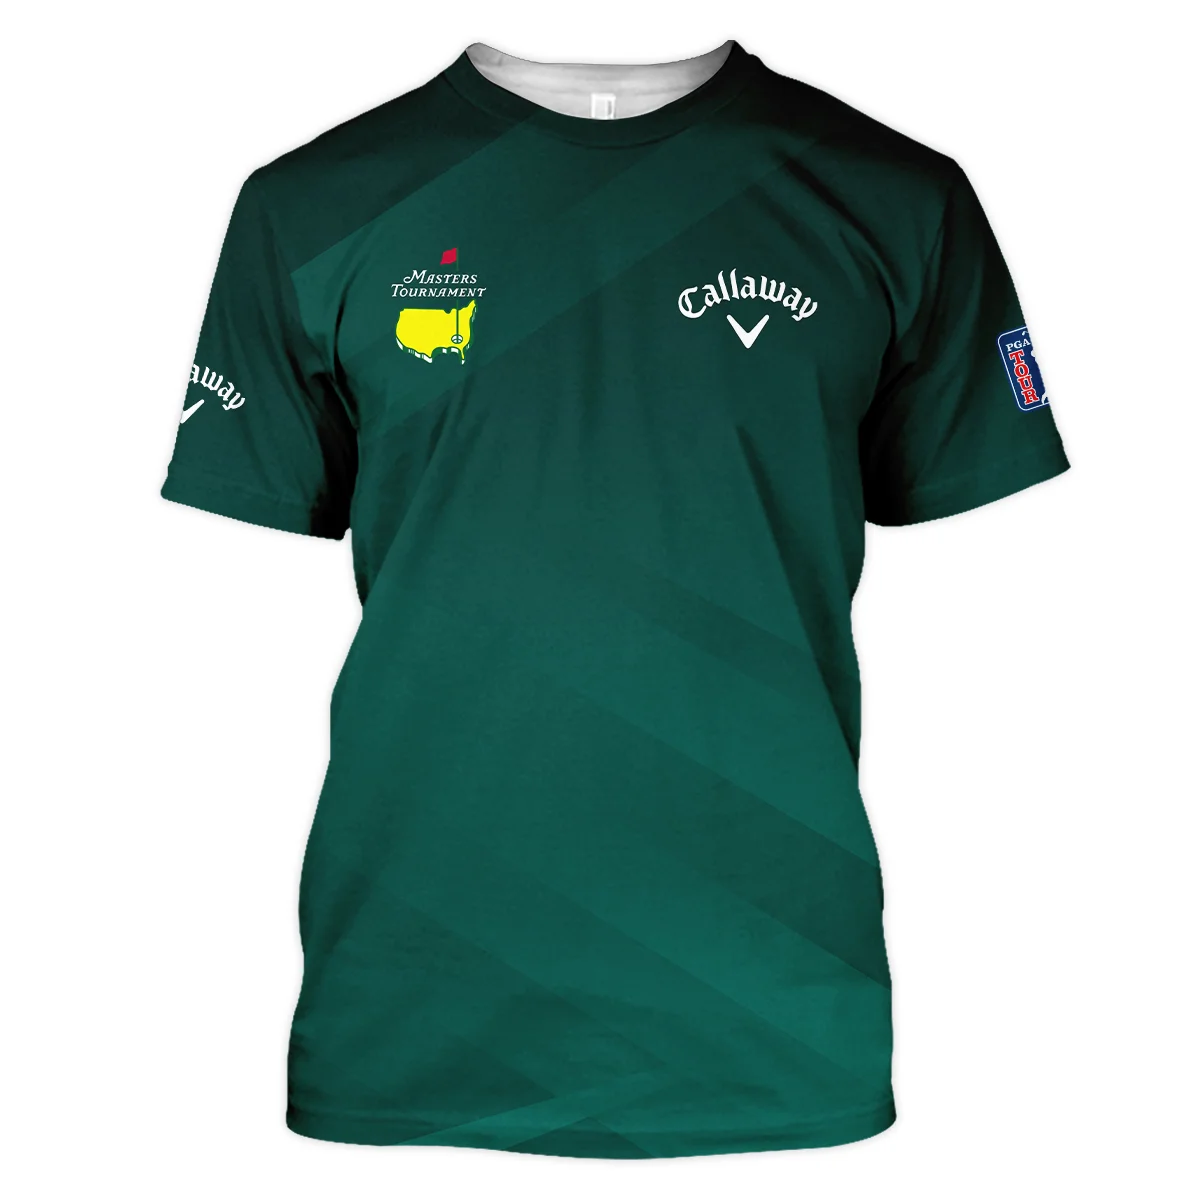 Masters Tournament Dark Green Gradient Golf Sport Callaway Vneck Polo Shirt Style Classic Polo Shirt For Men